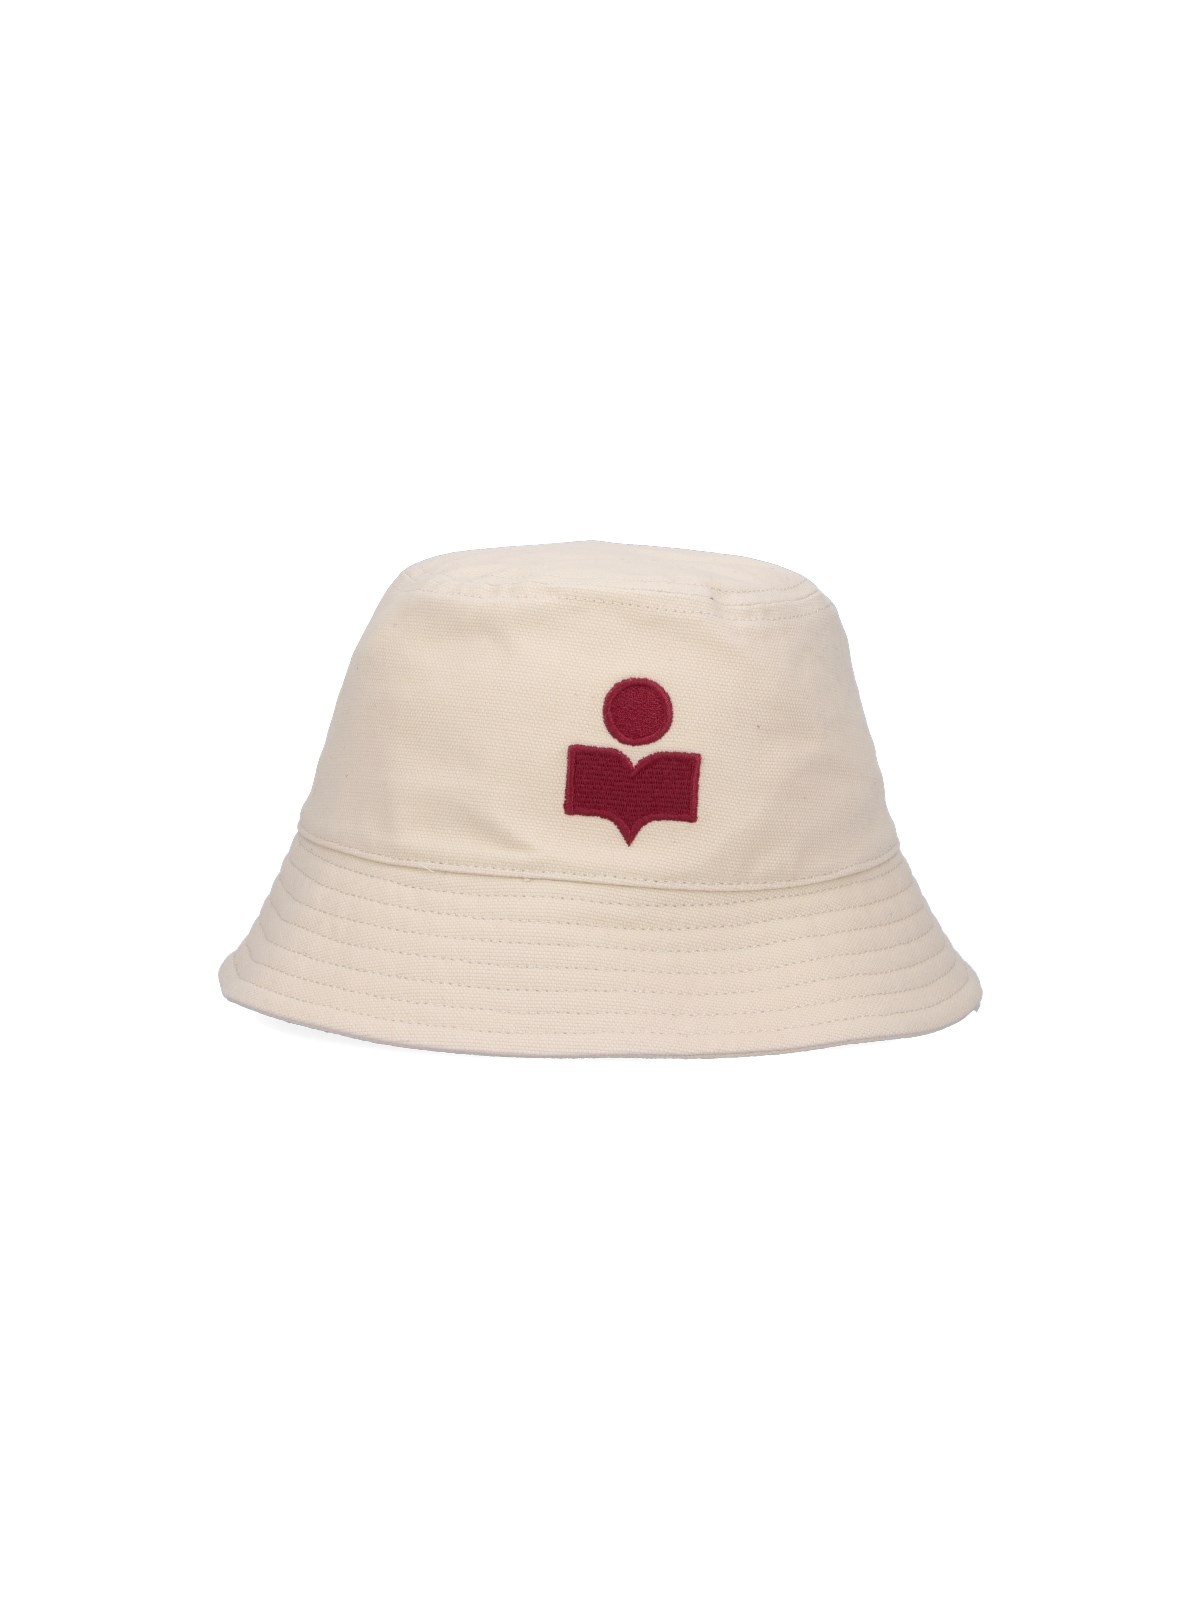 LOGO BUCKET HAT - 1